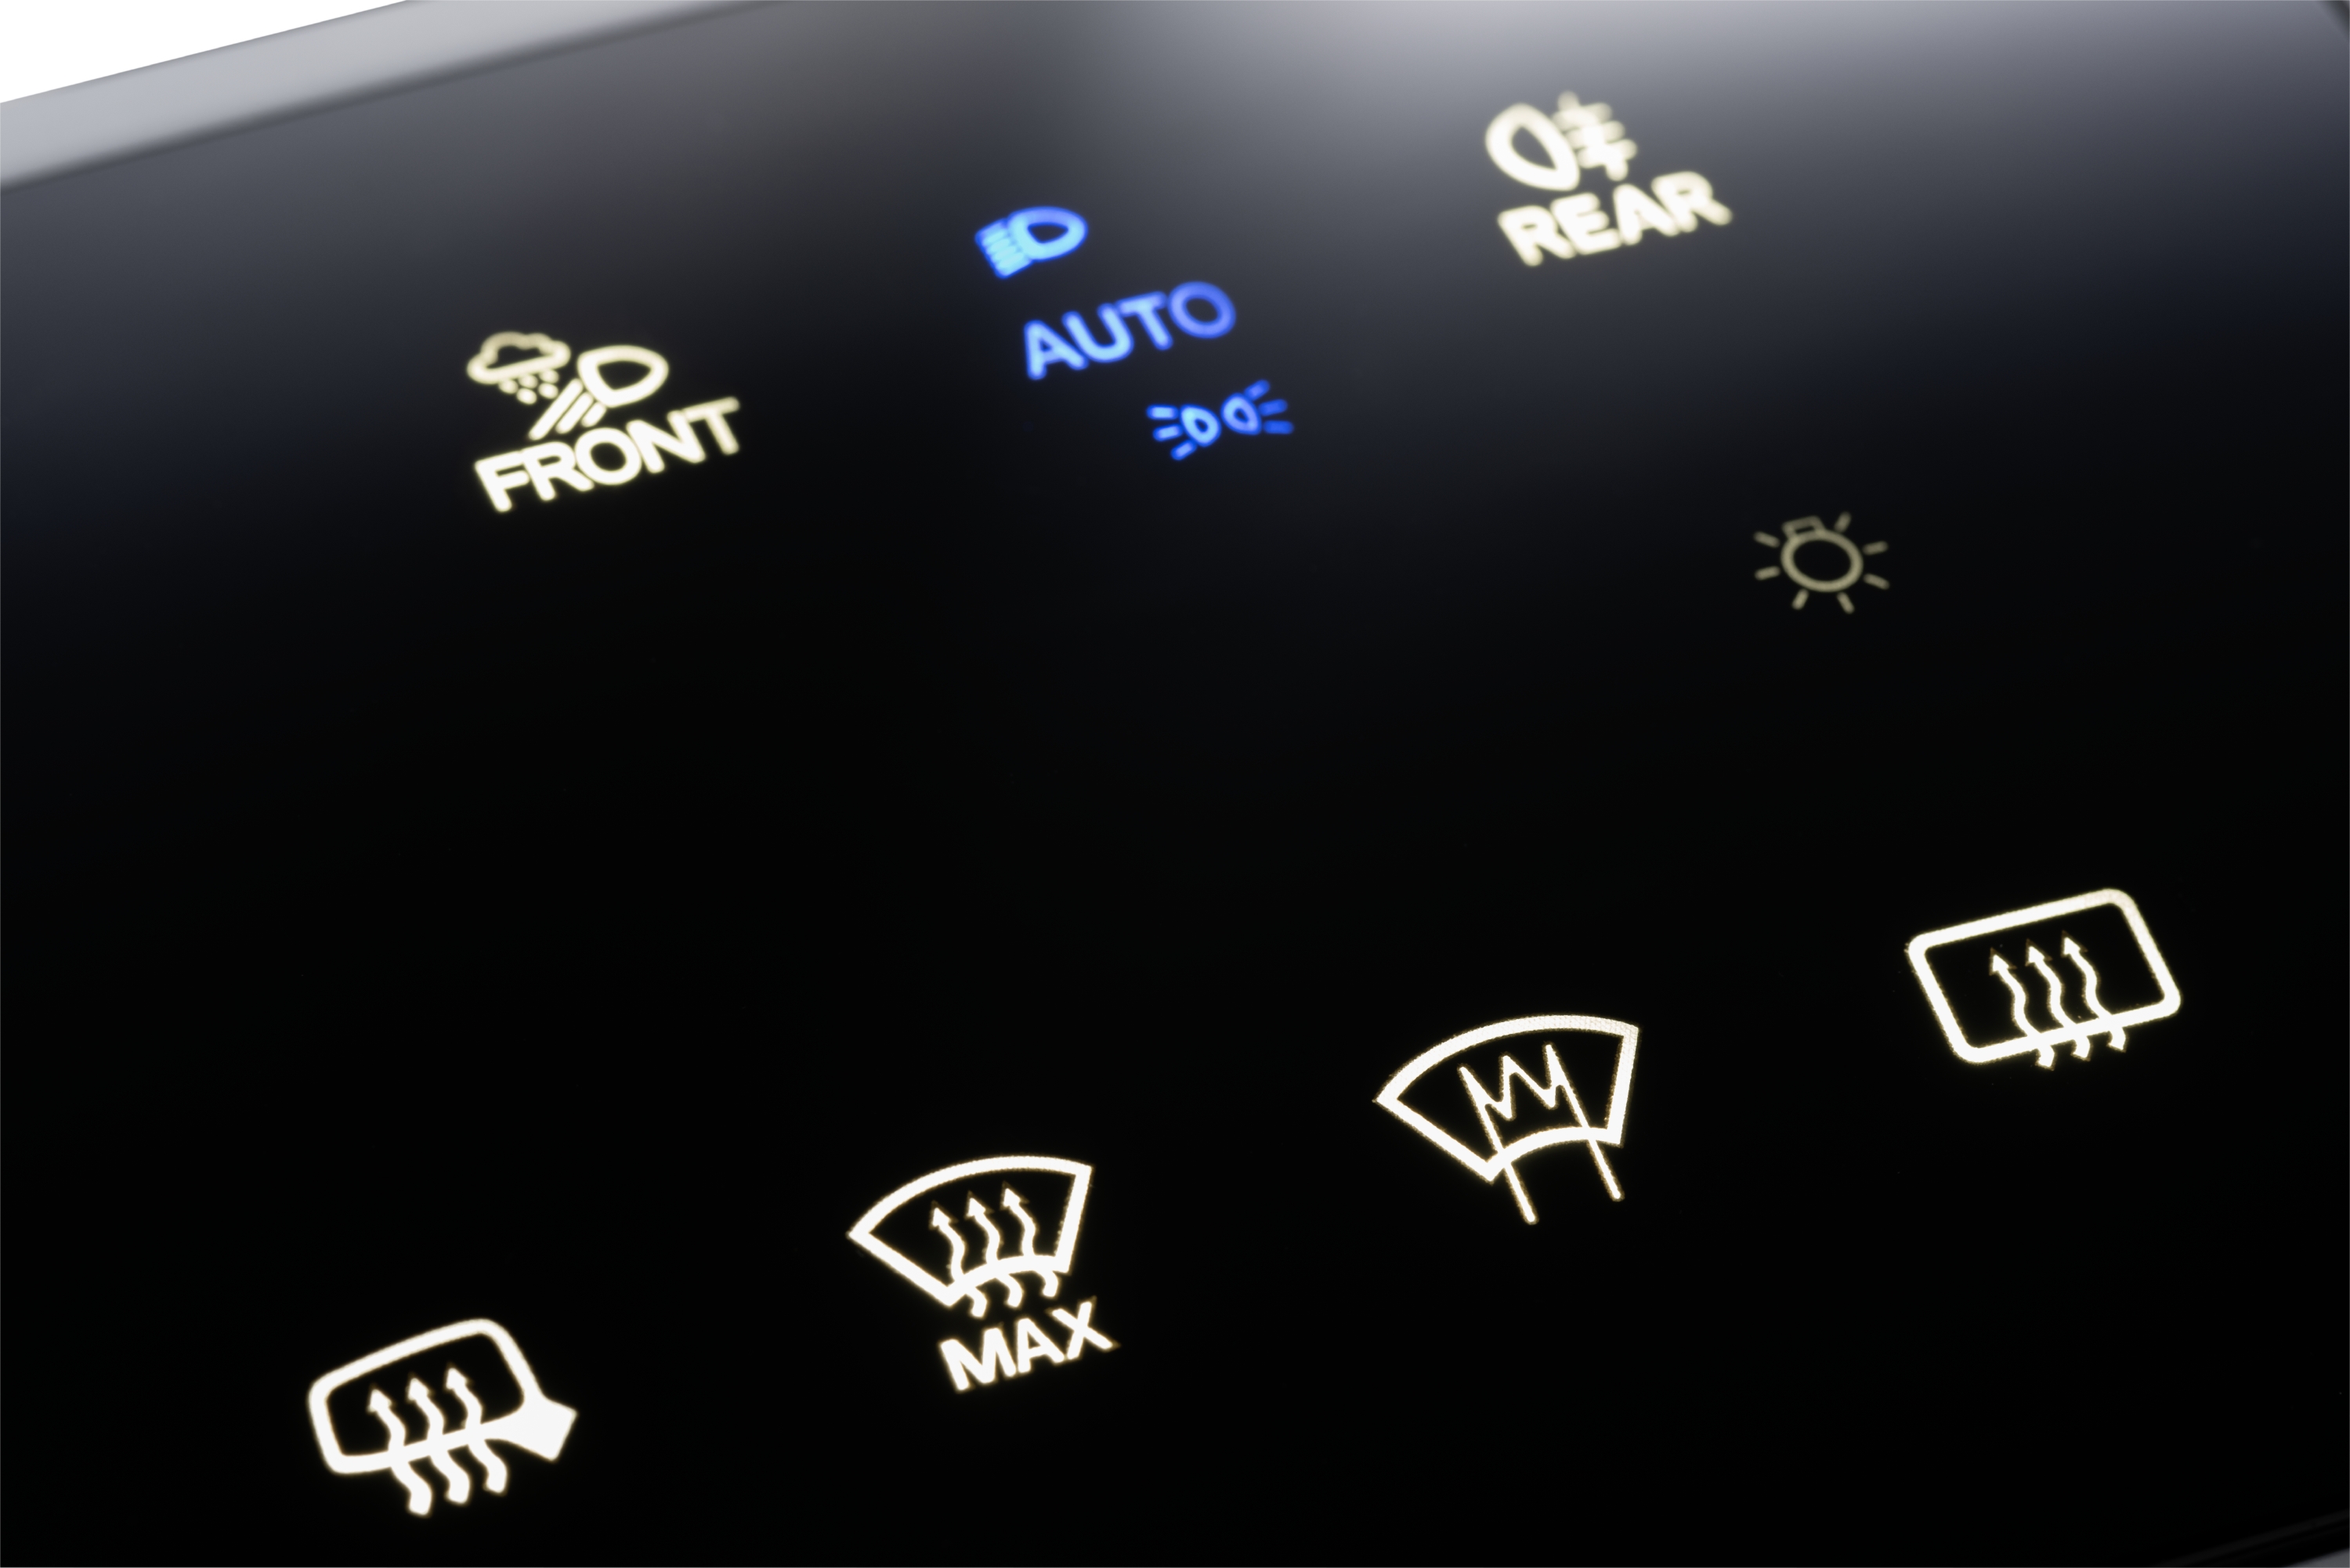 hmi and PolyIC sensor technology in car interior display backlit